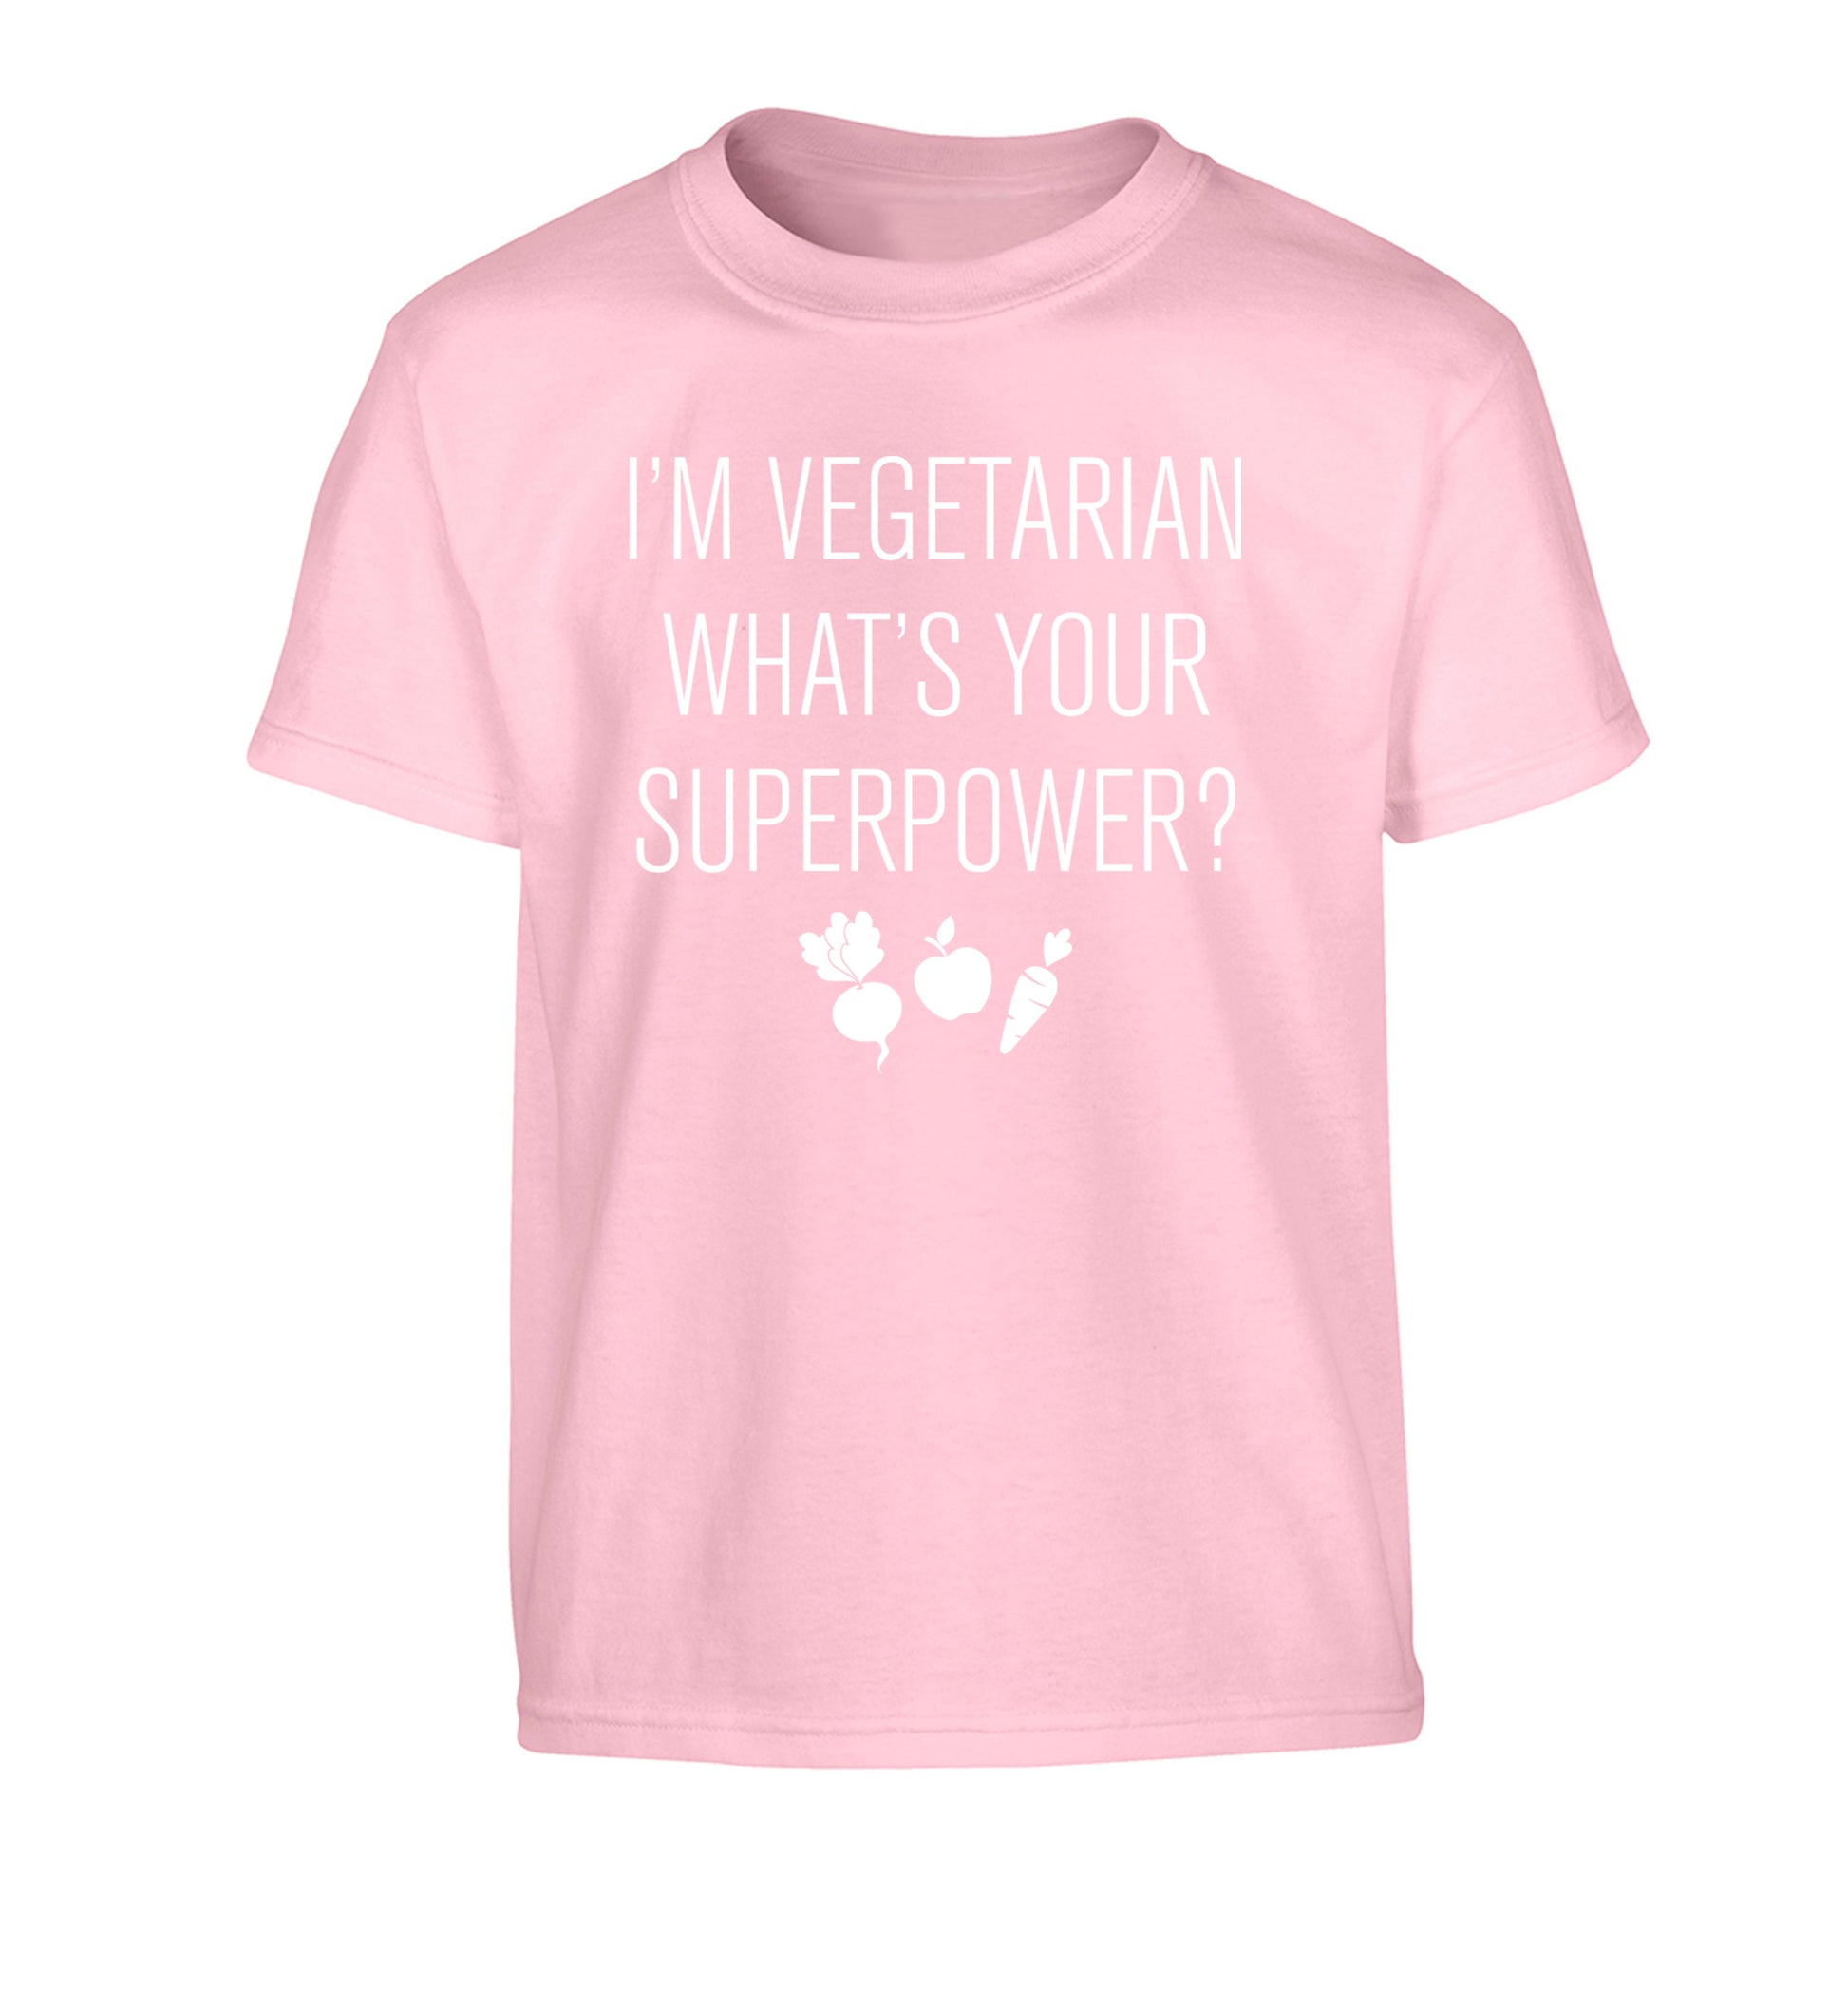 I'm vegetarian what's your superpower? Children's light pink Tshirt 12-13 Years